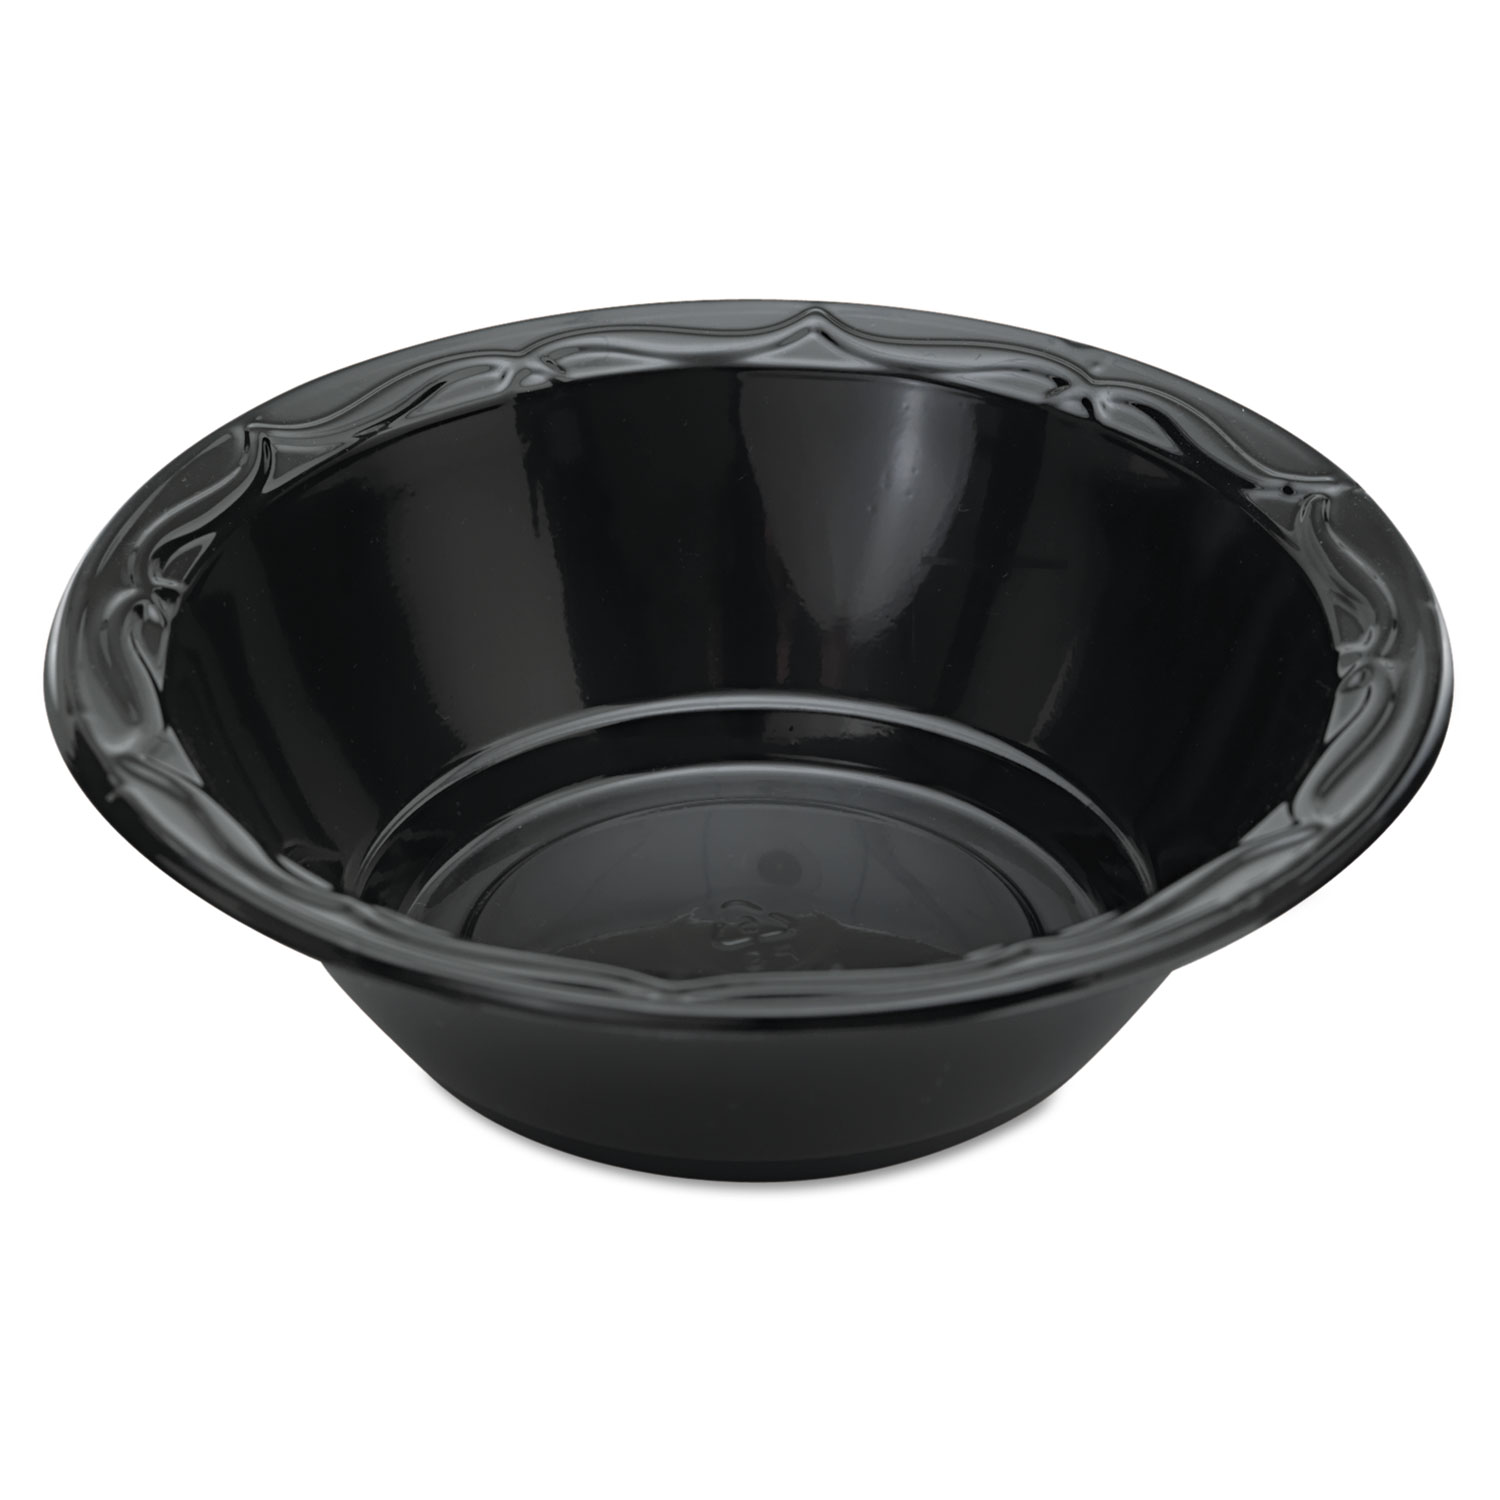  Genpak BLK21--- Silhouette Plastic Dinnerware, Bowl, 12 oz, Black, 125/Pack, 8 Packs/Carton (GNPBLK21) 